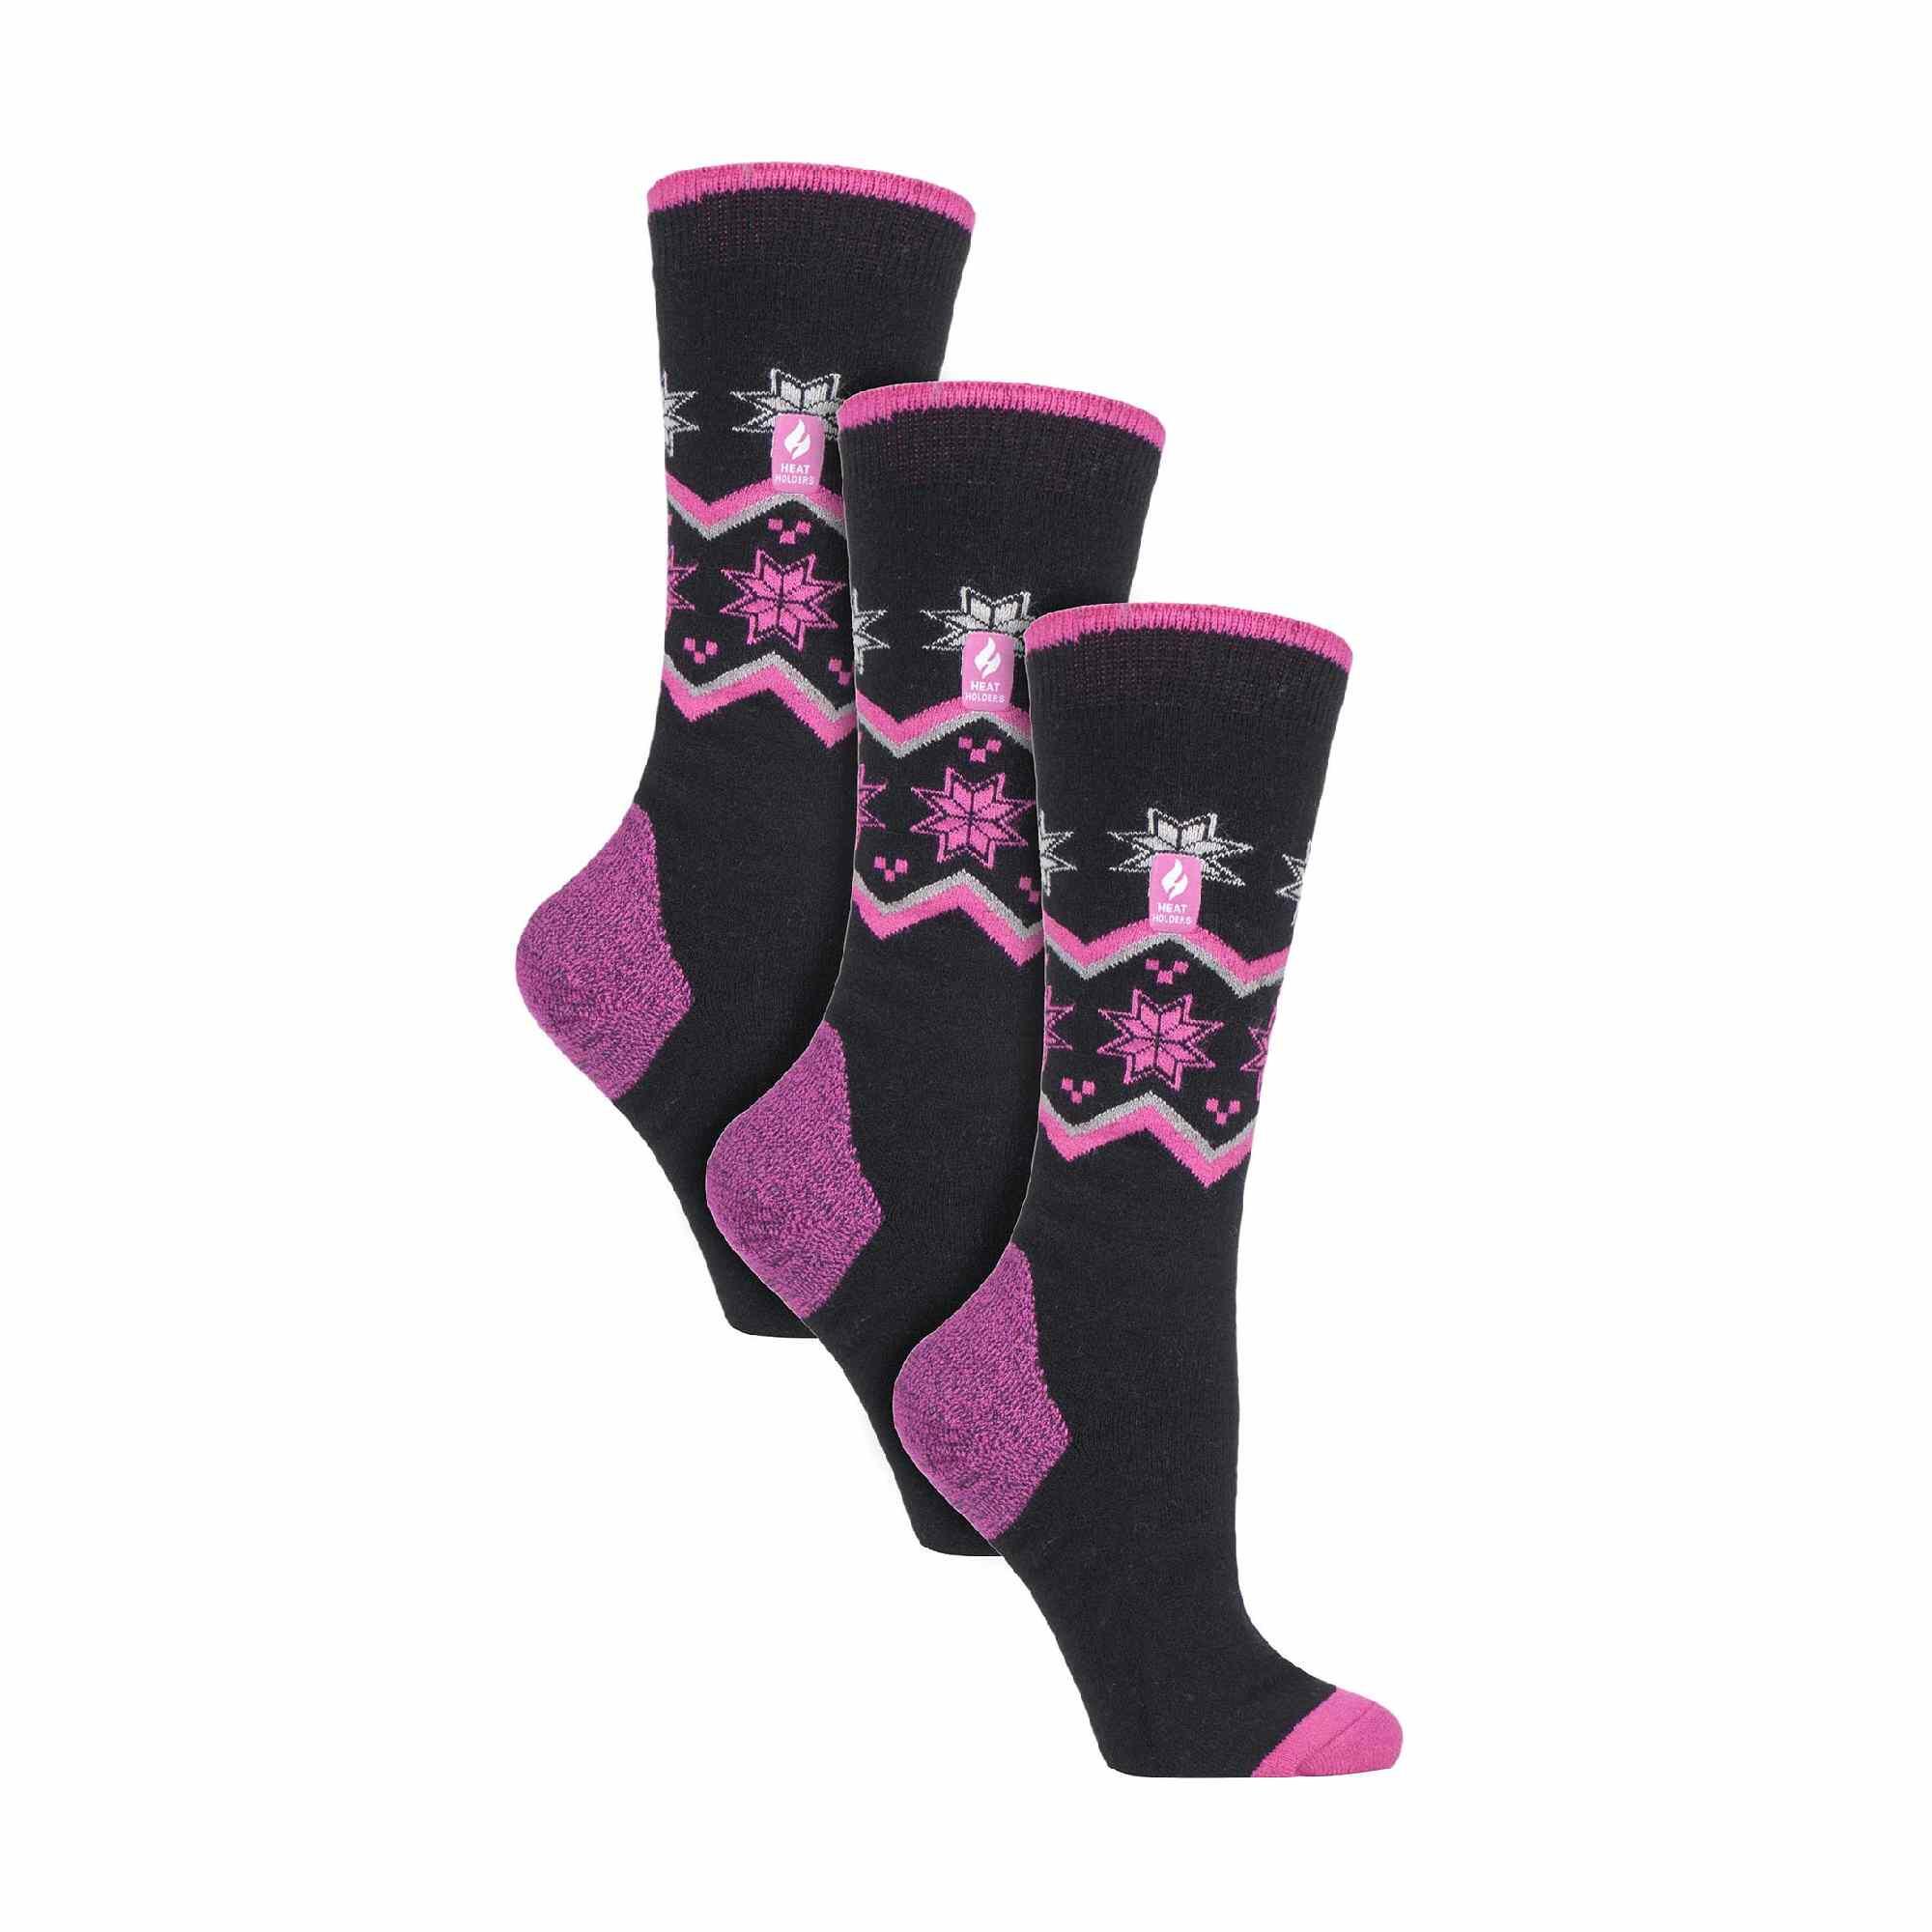 3 Pack Ladies Patterned Lightweight Thin 1.0 TOG Thermal Knee High Ski Socks 1/4